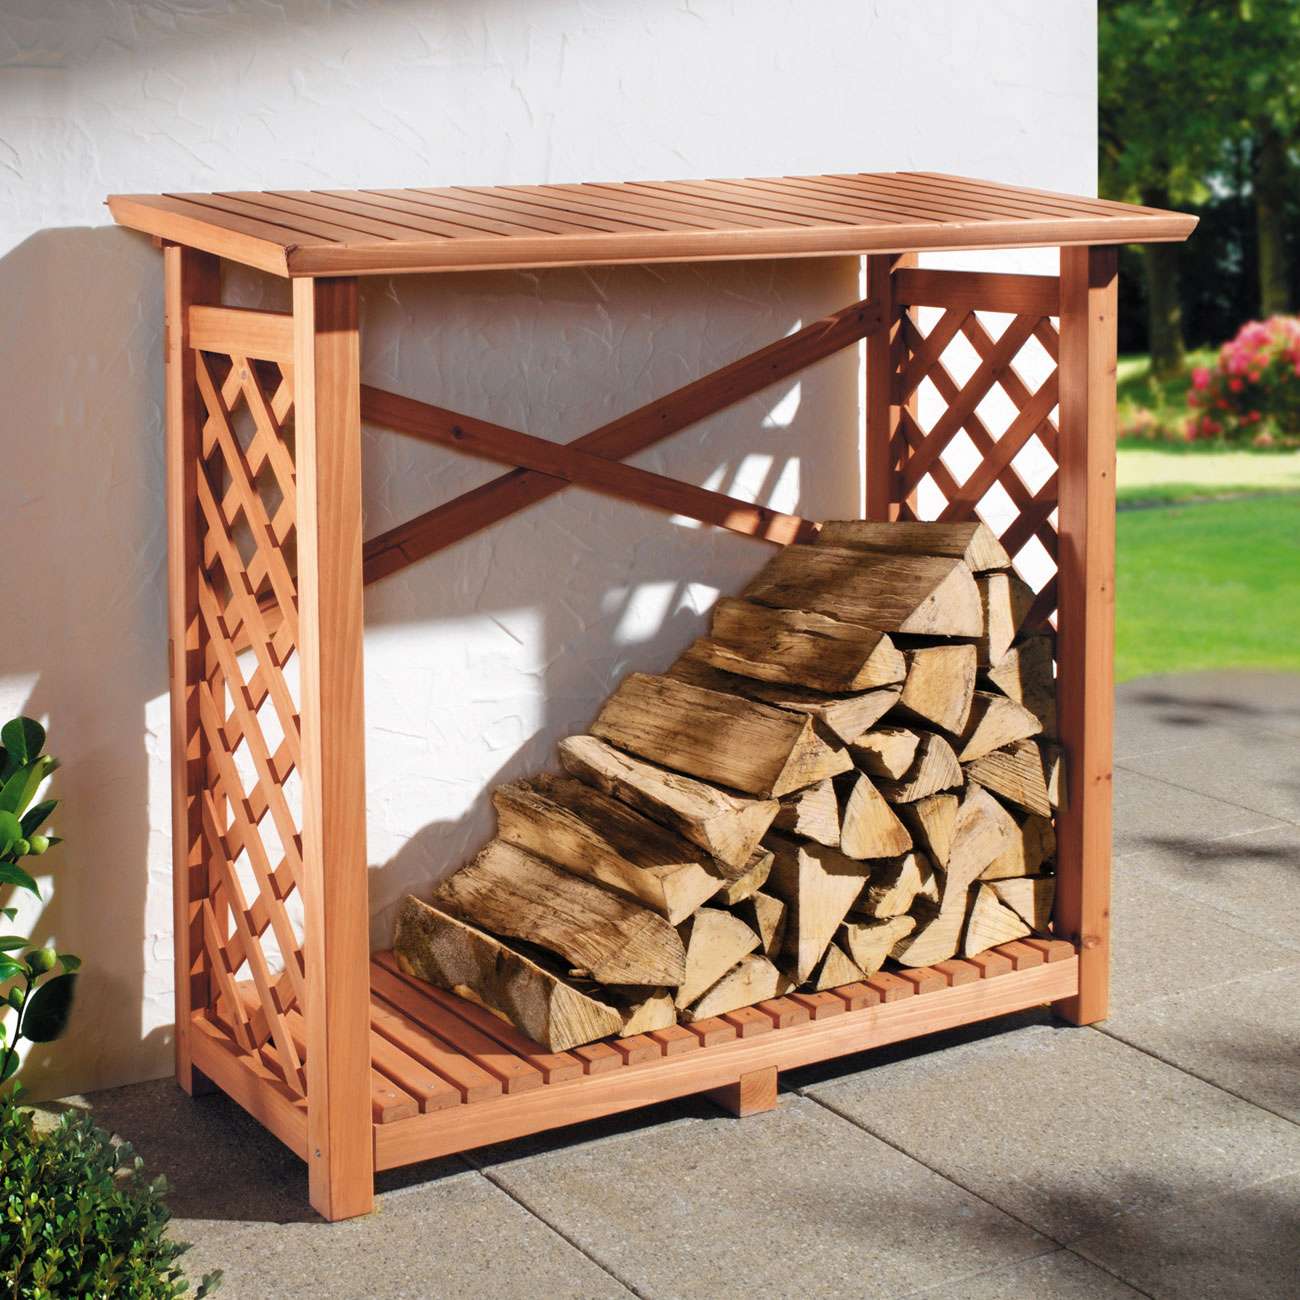  diy firewood storage rack plans